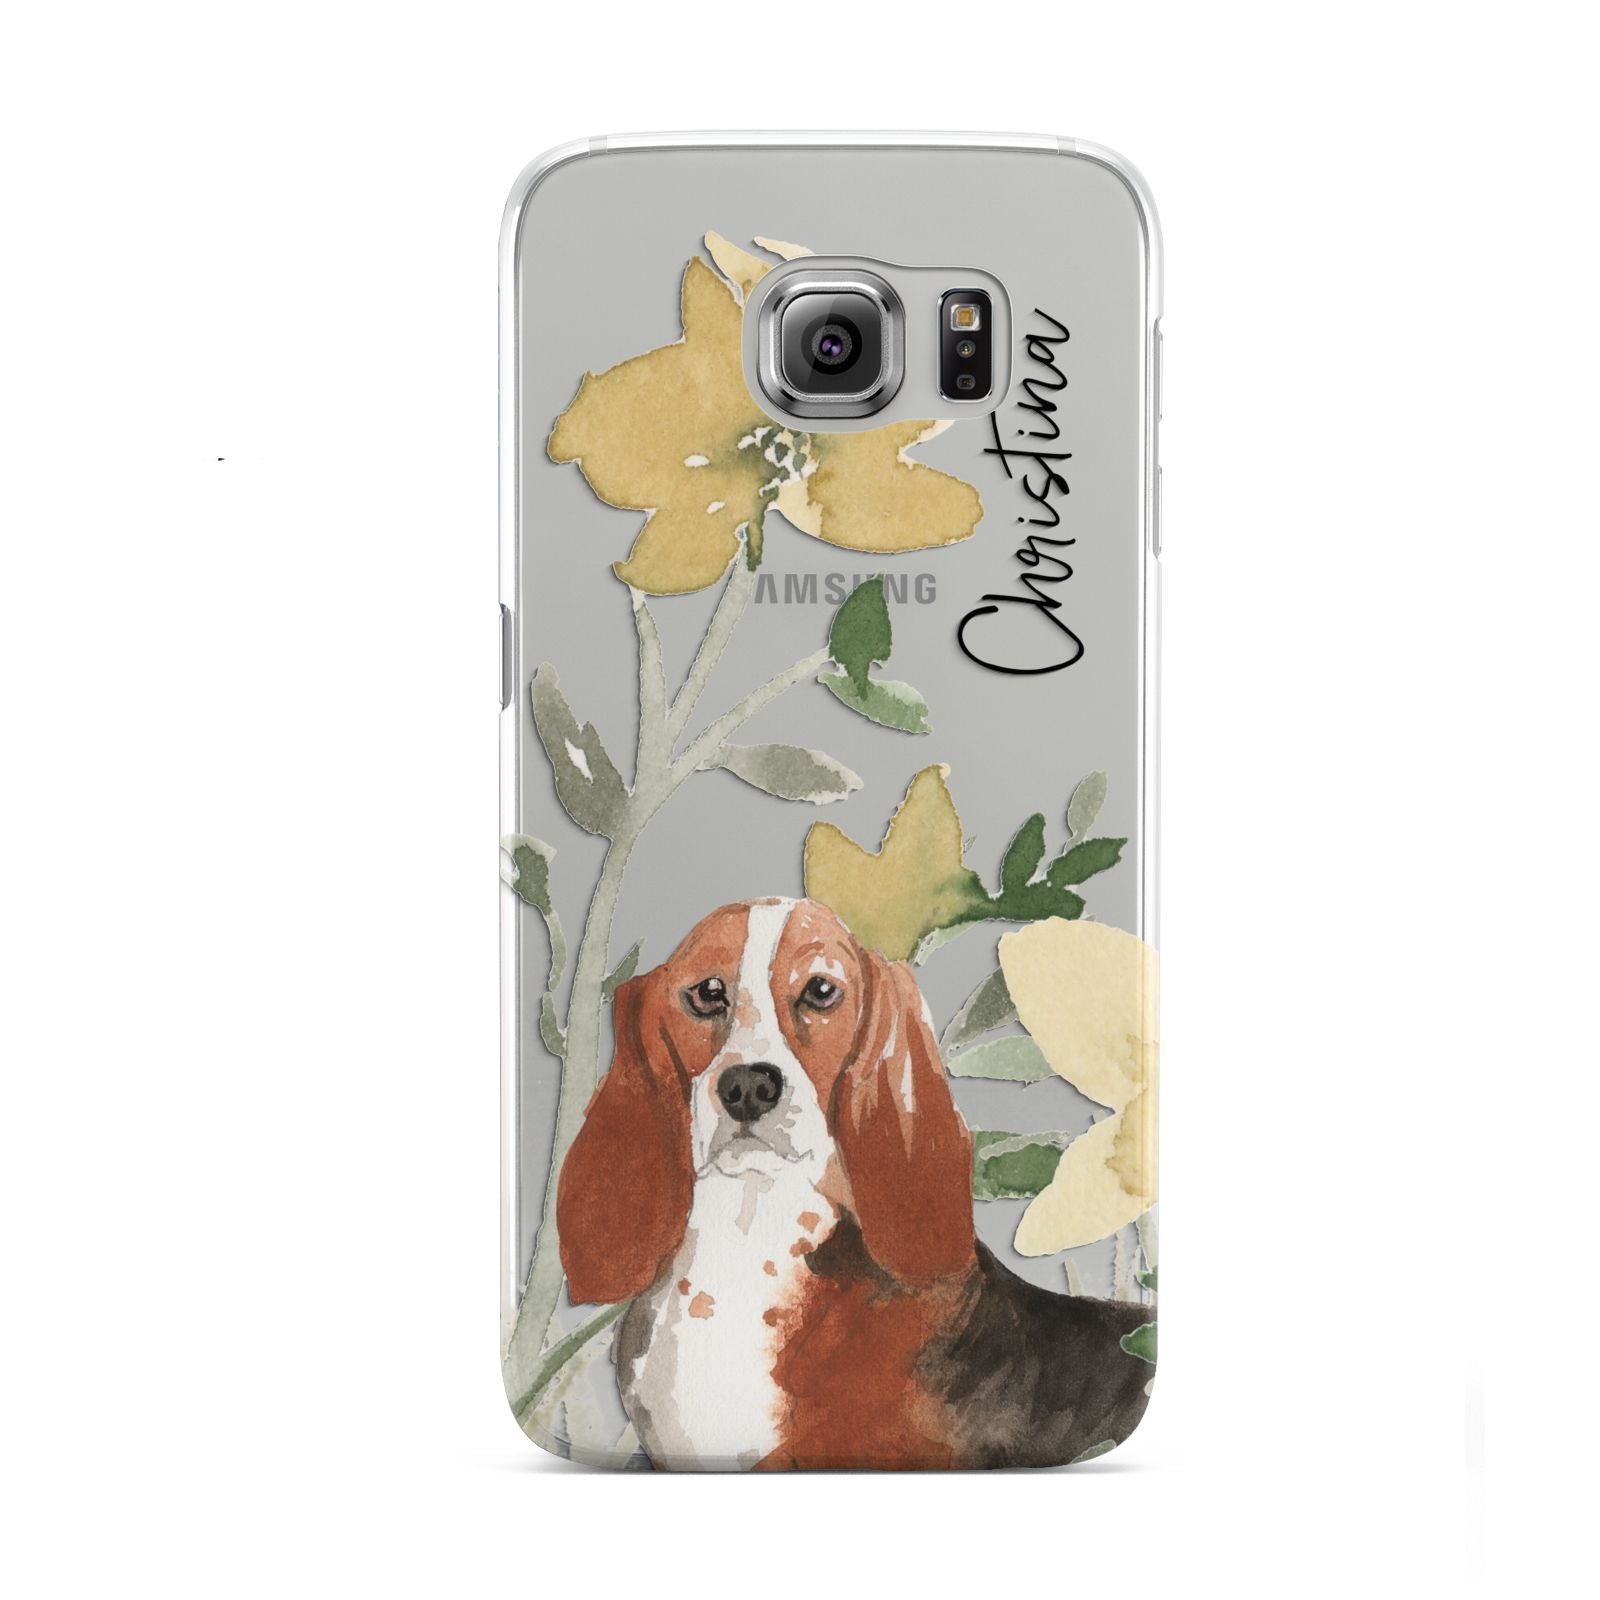 Personalised Basset Hound Dog Samsung Galaxy S6 Case